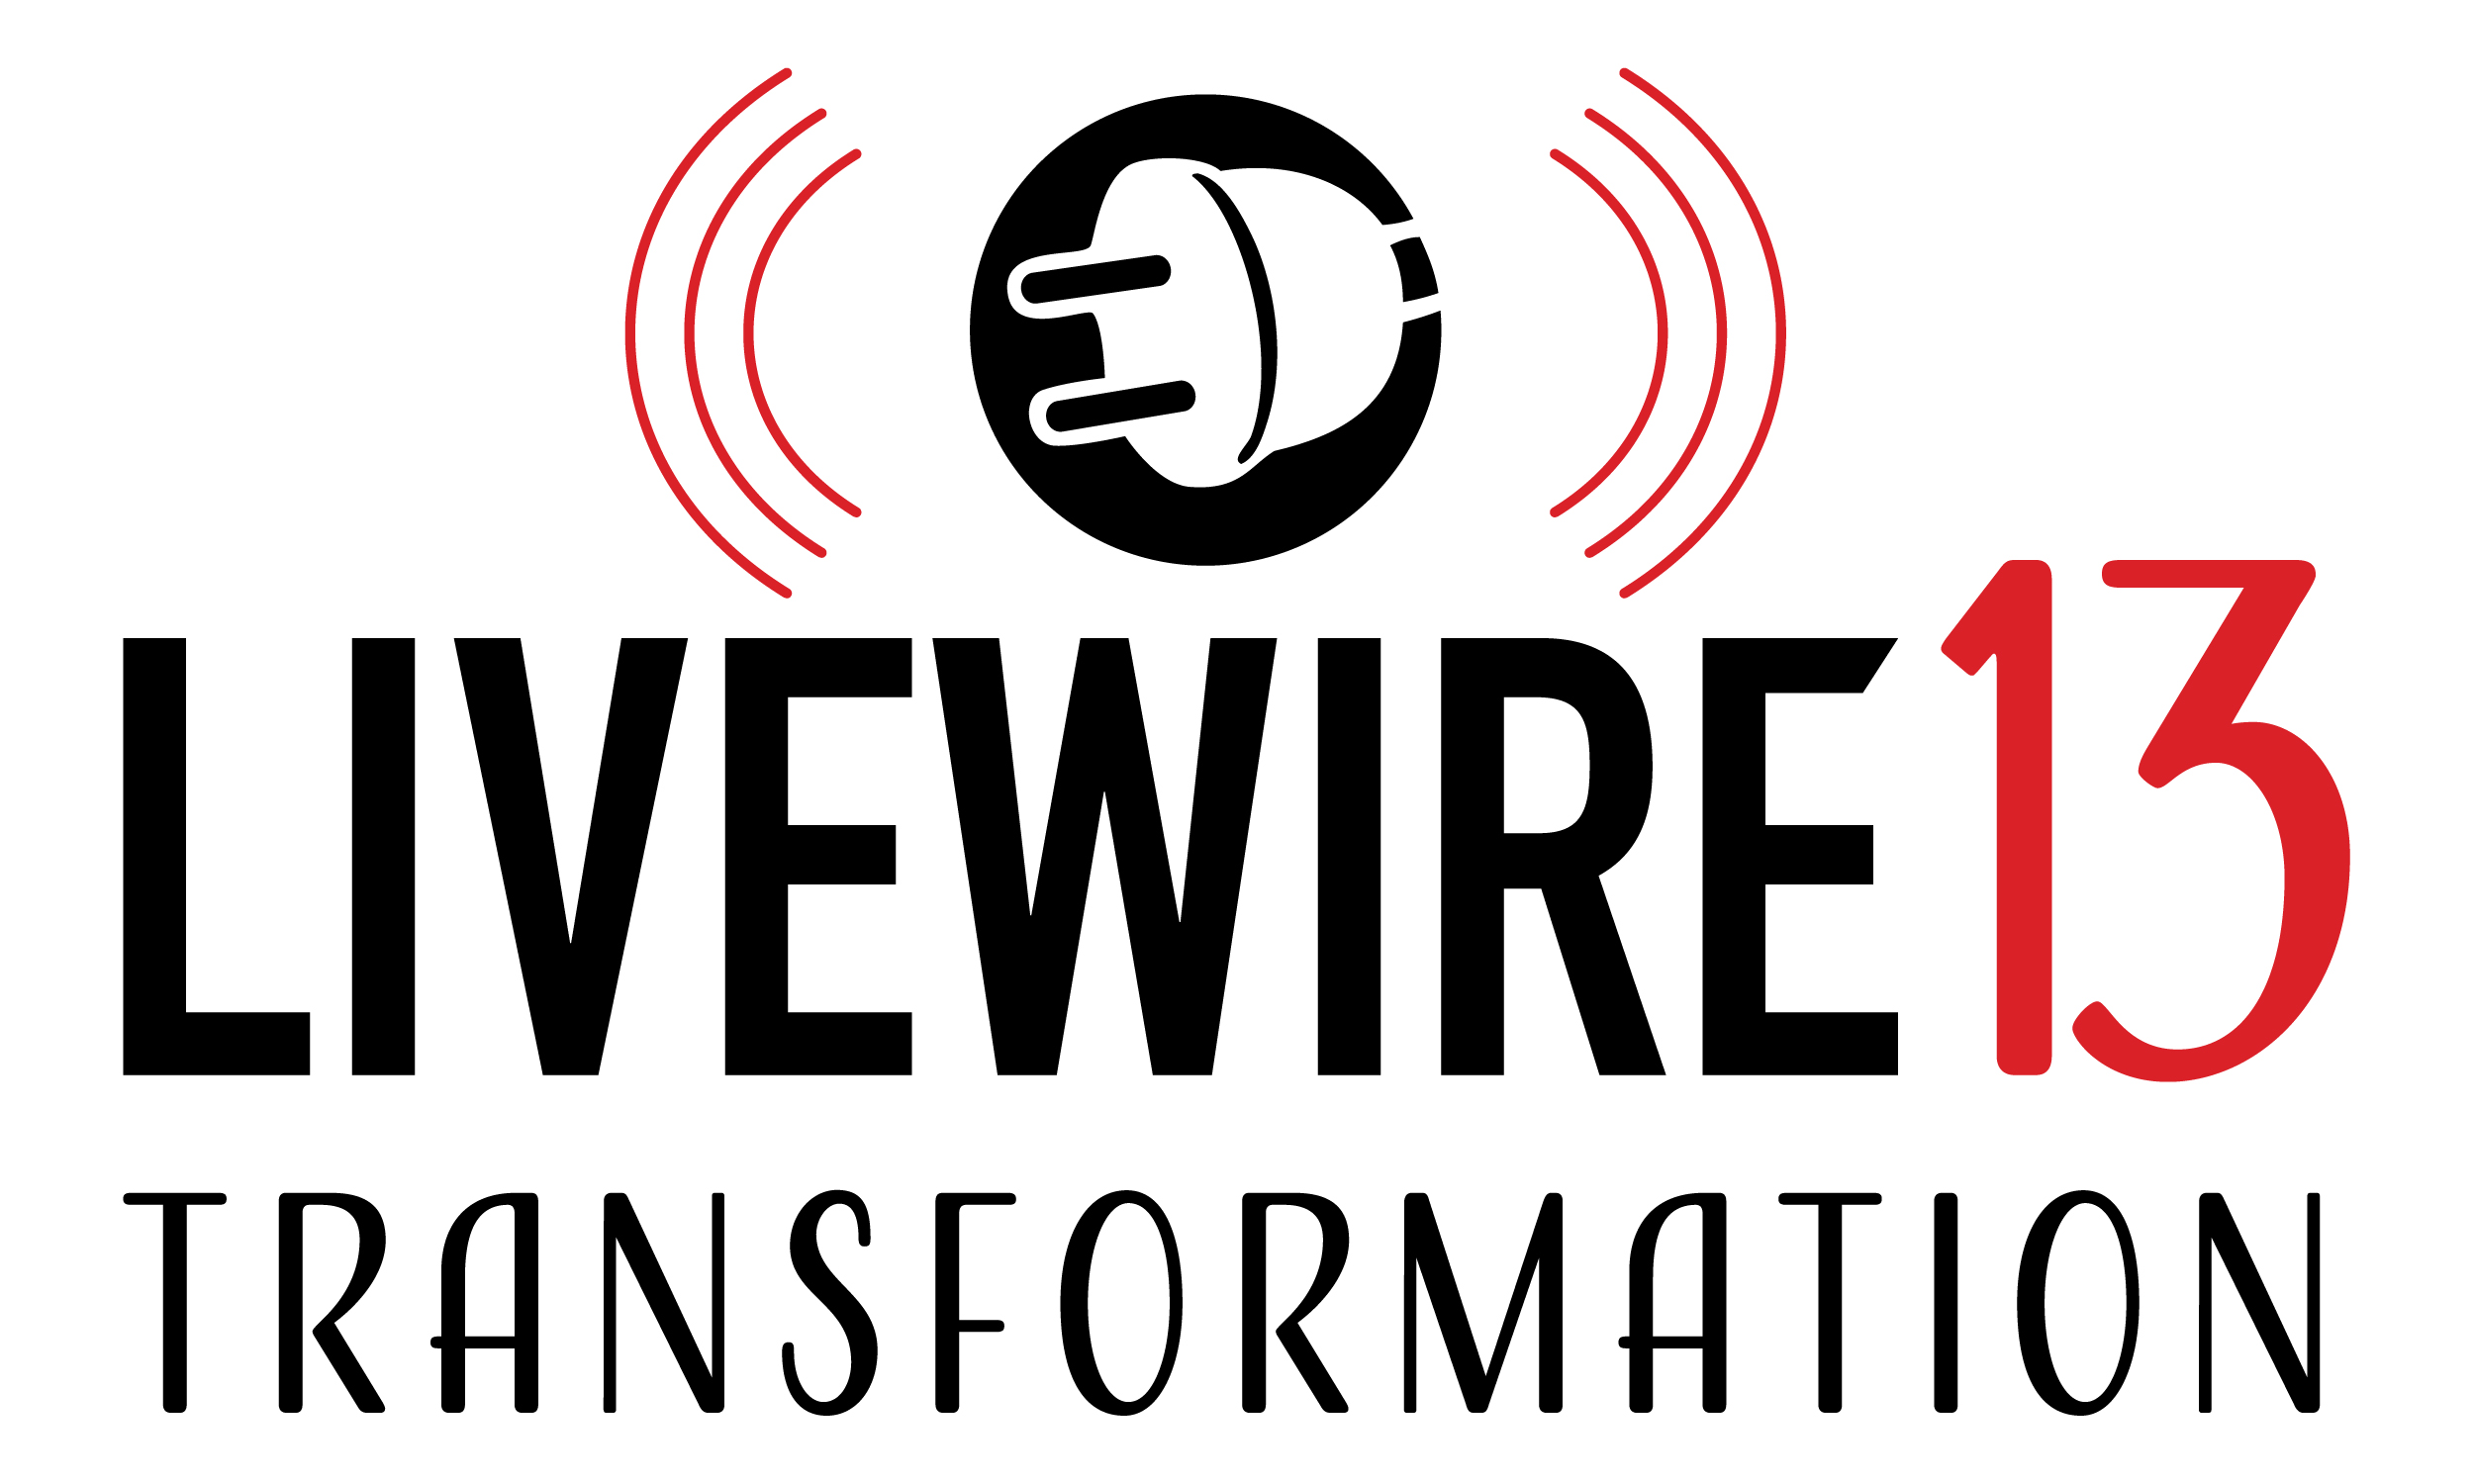 A logo says Livewire 13: Transformation